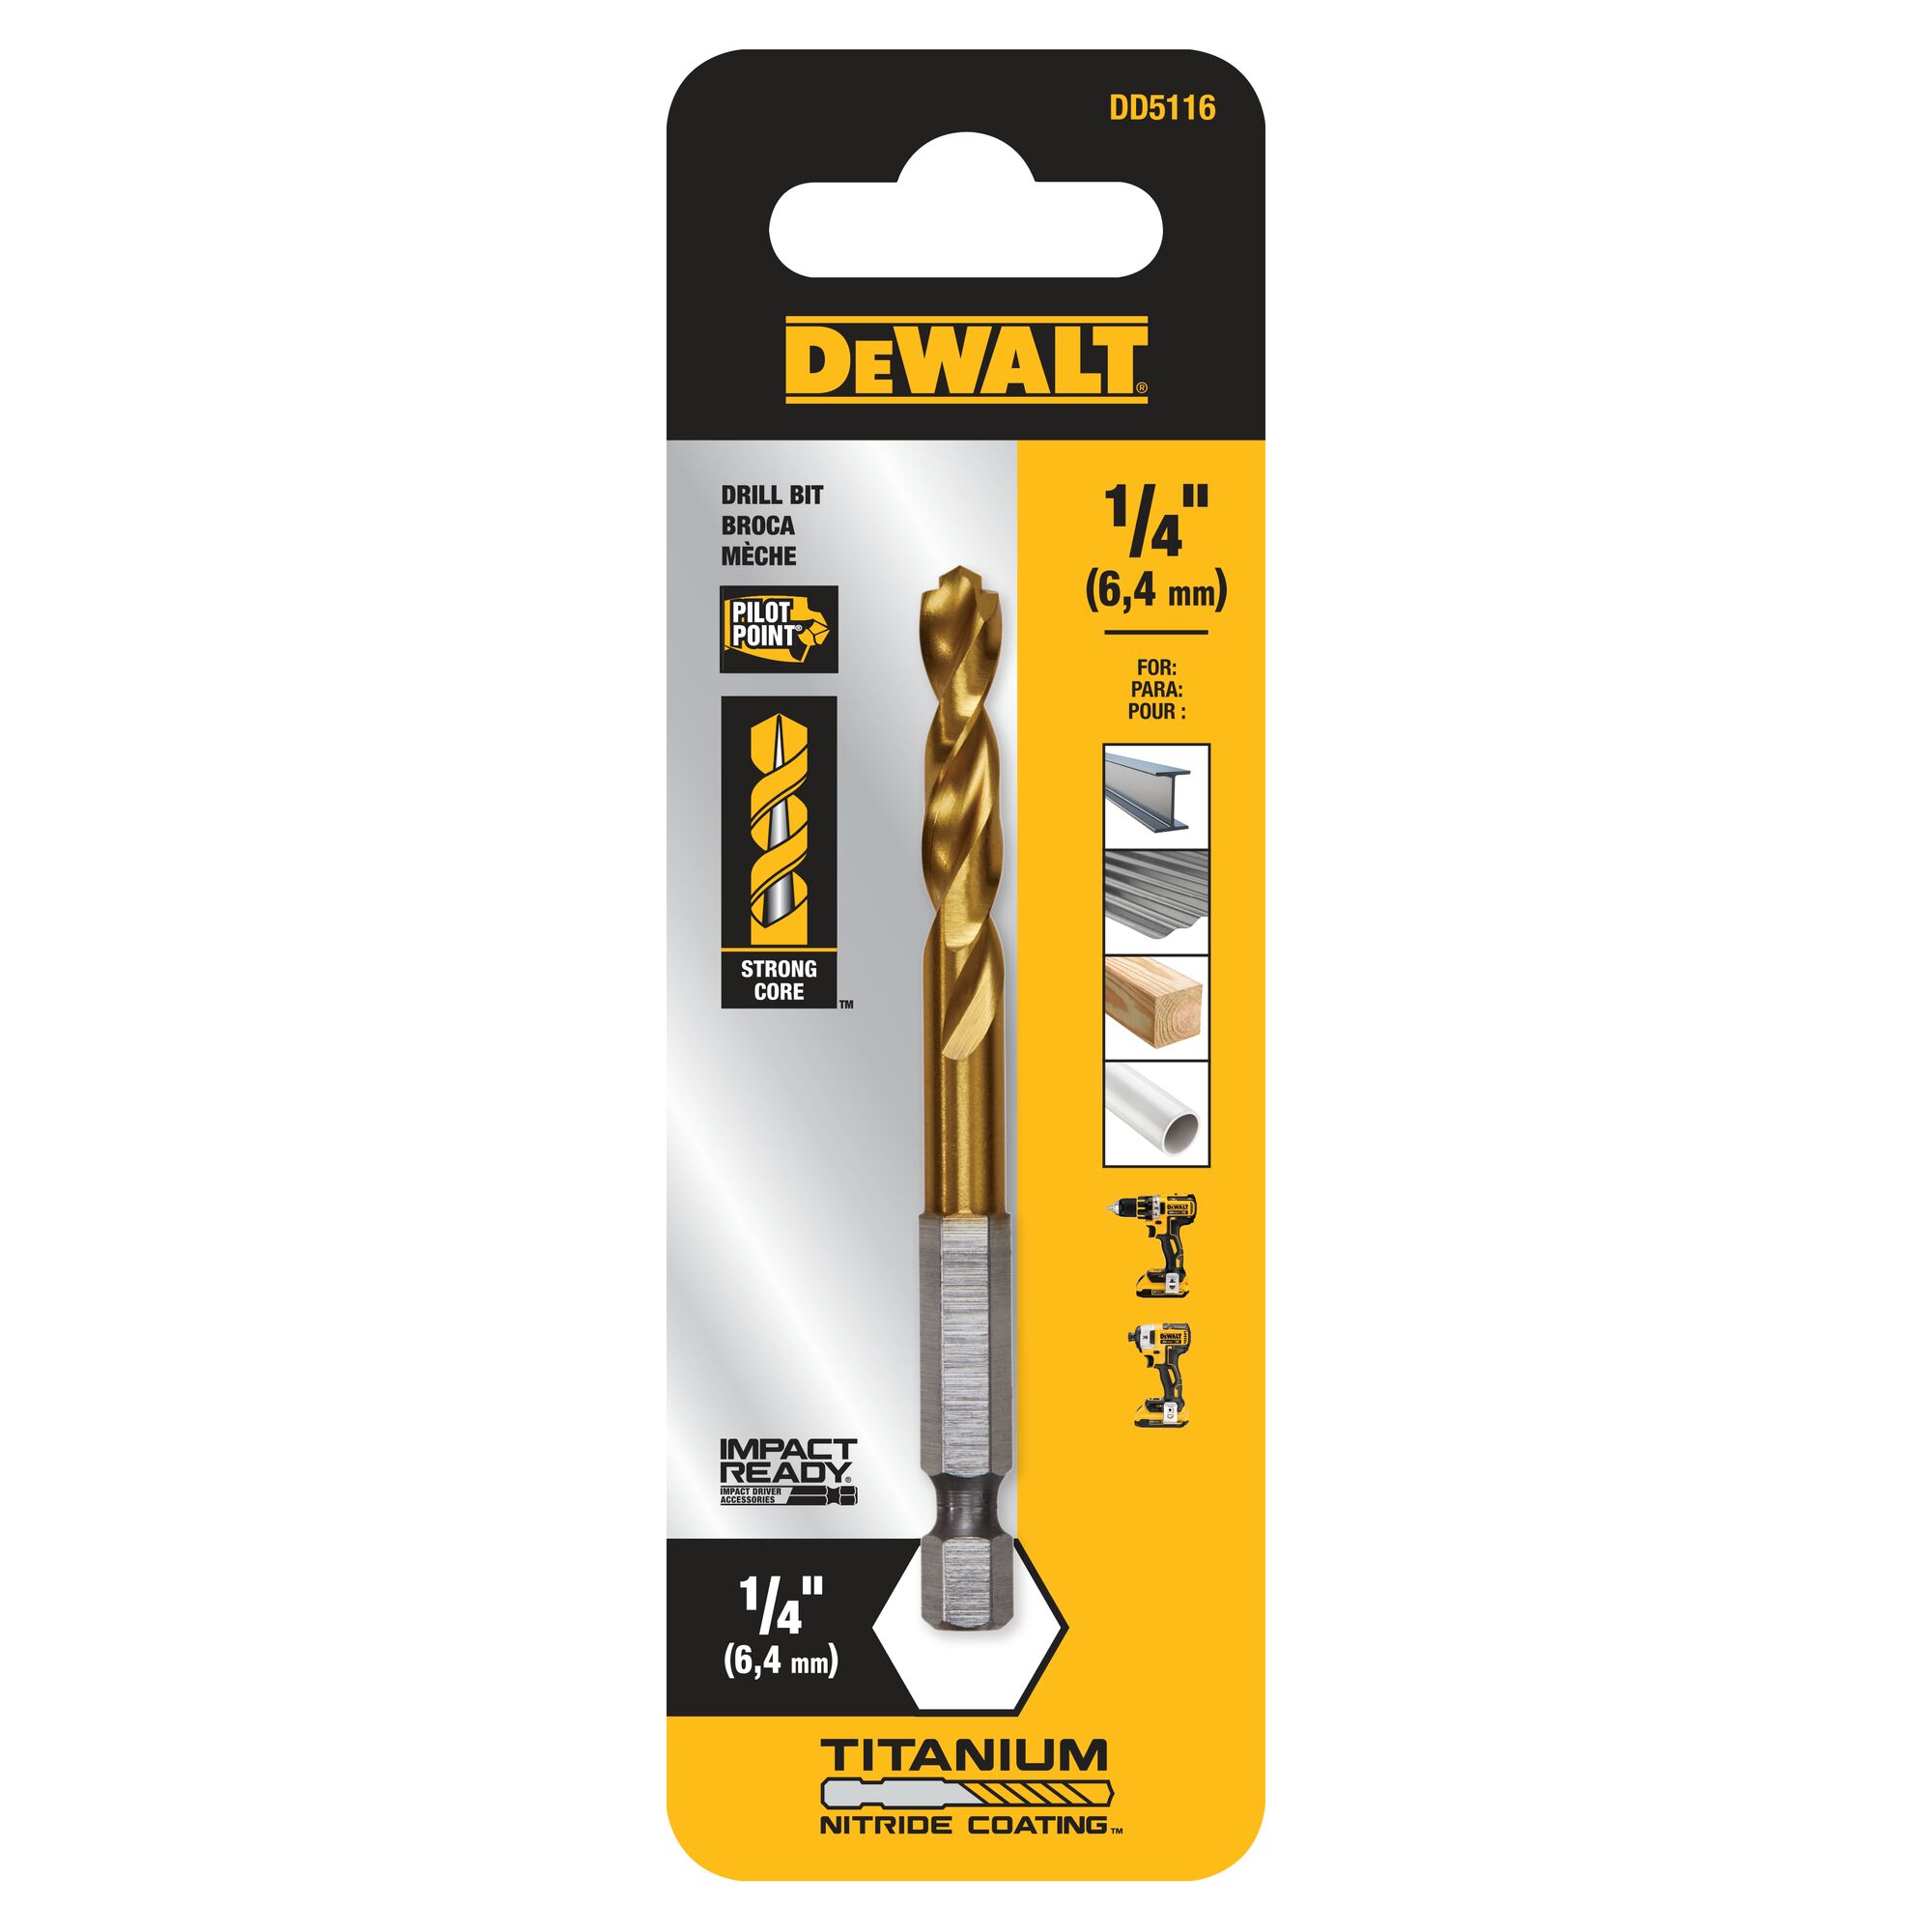 IMPACT READY® Titanium Nitride Coating Drill Bits | DEWALT